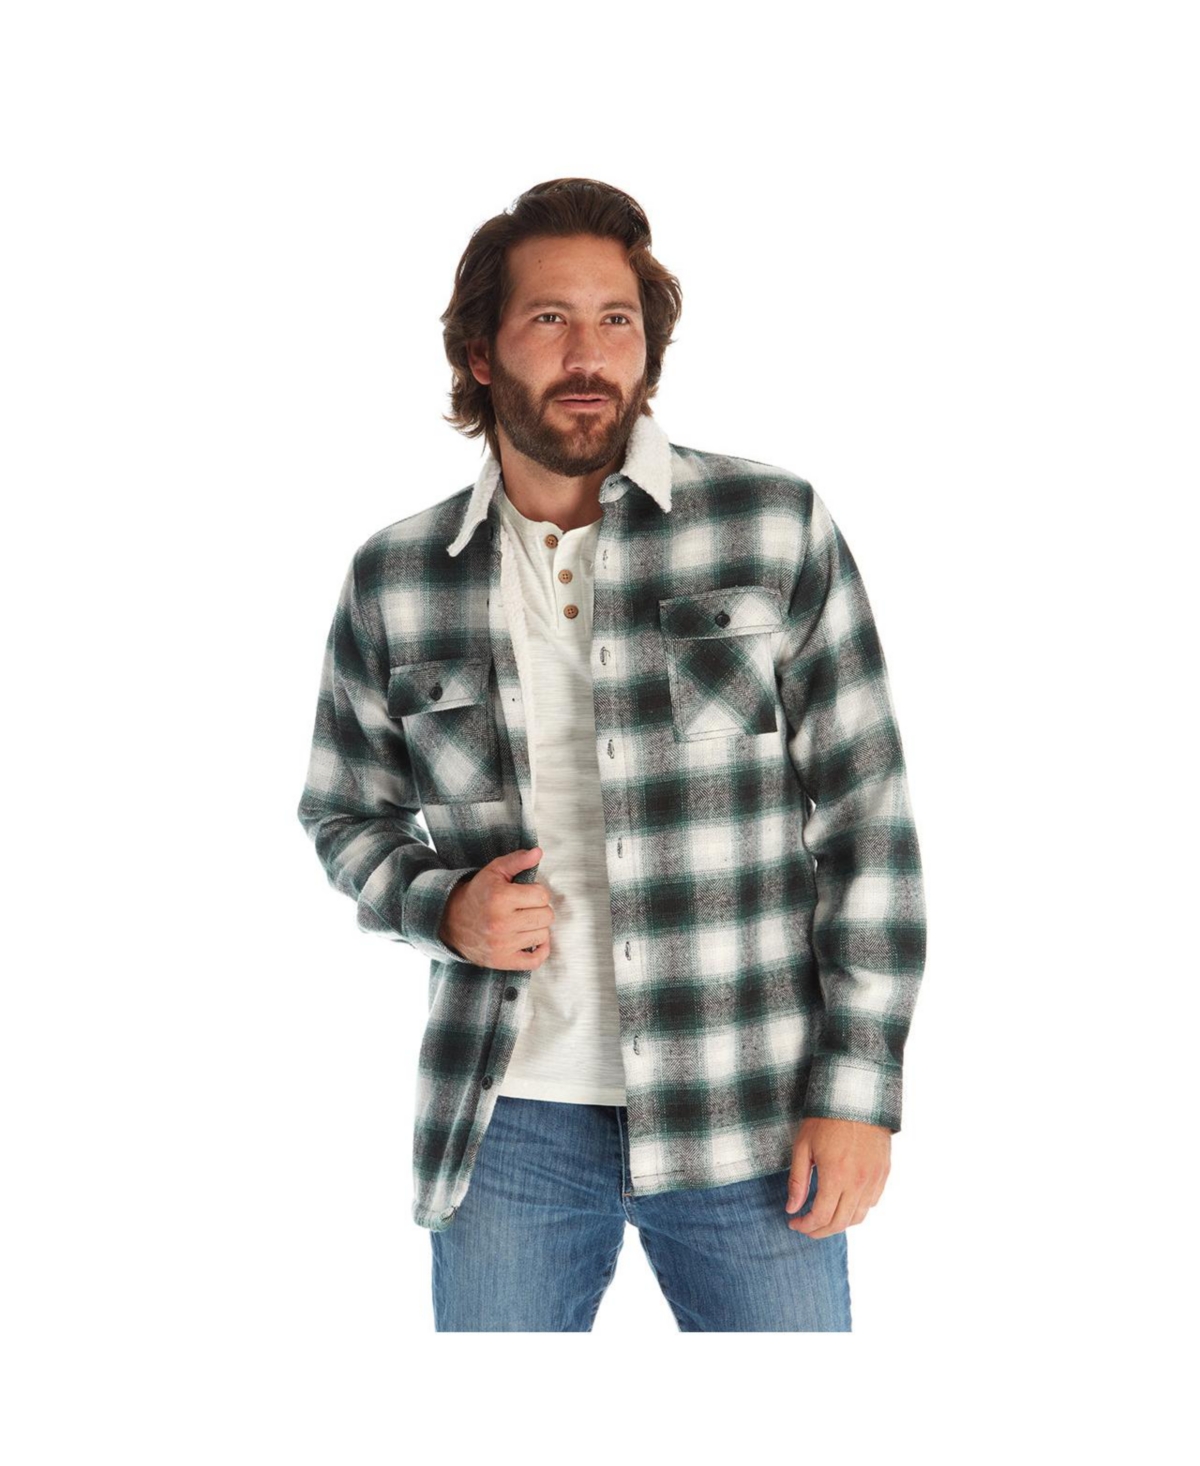 Clothing Men's Faux Fur Lined Plaid Shirt Jacket - Green